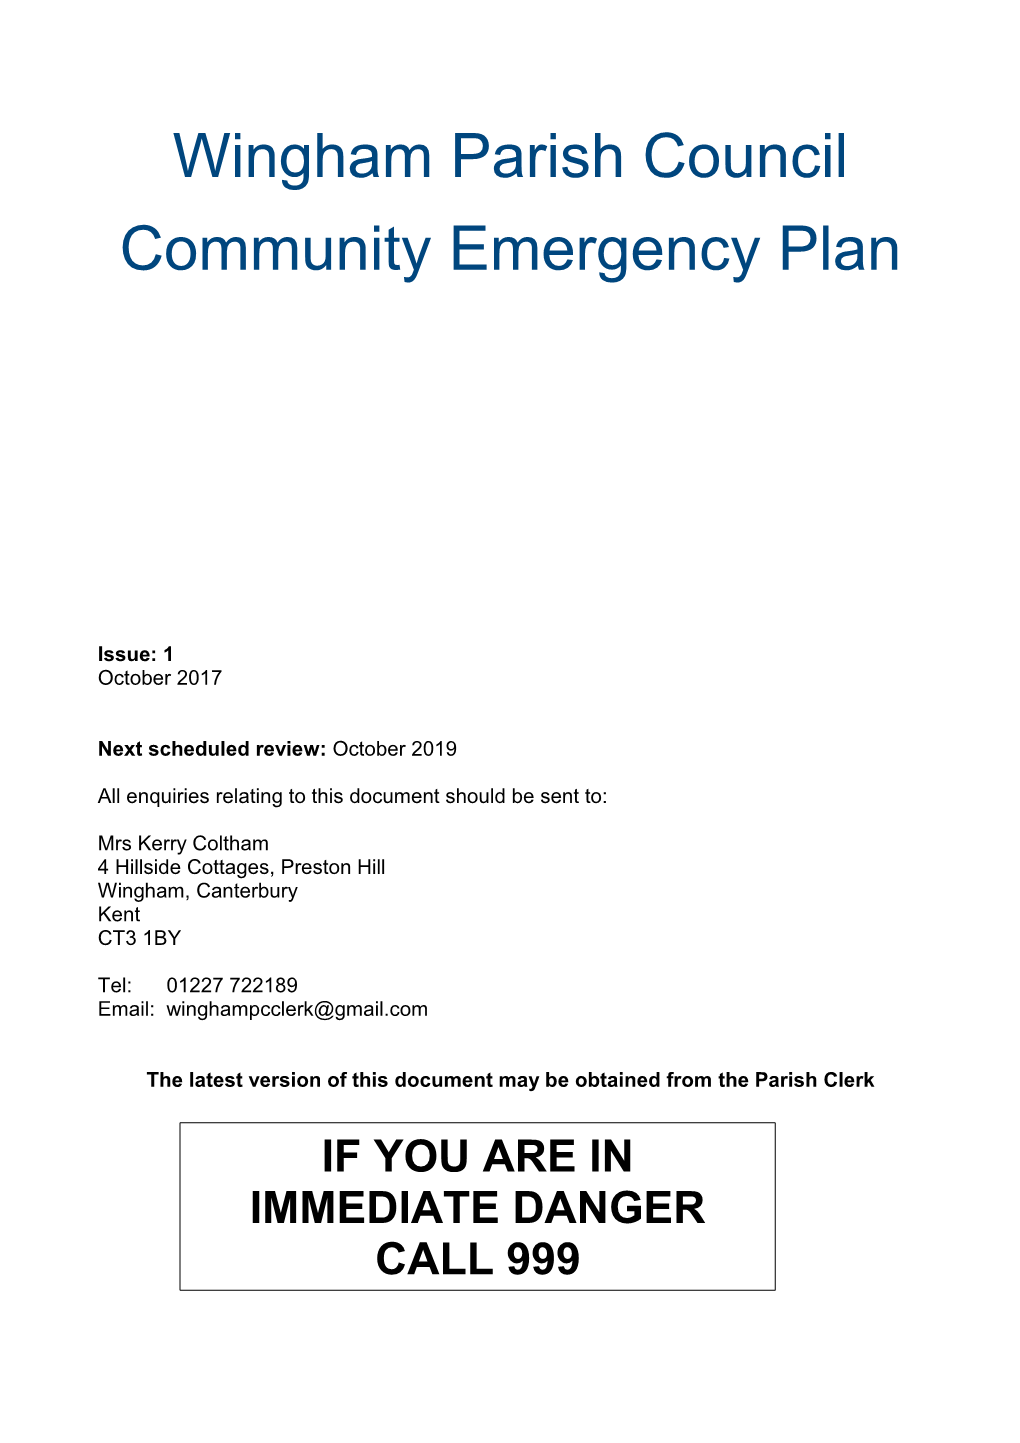 Wingham Parish Council Community Emergency Plan